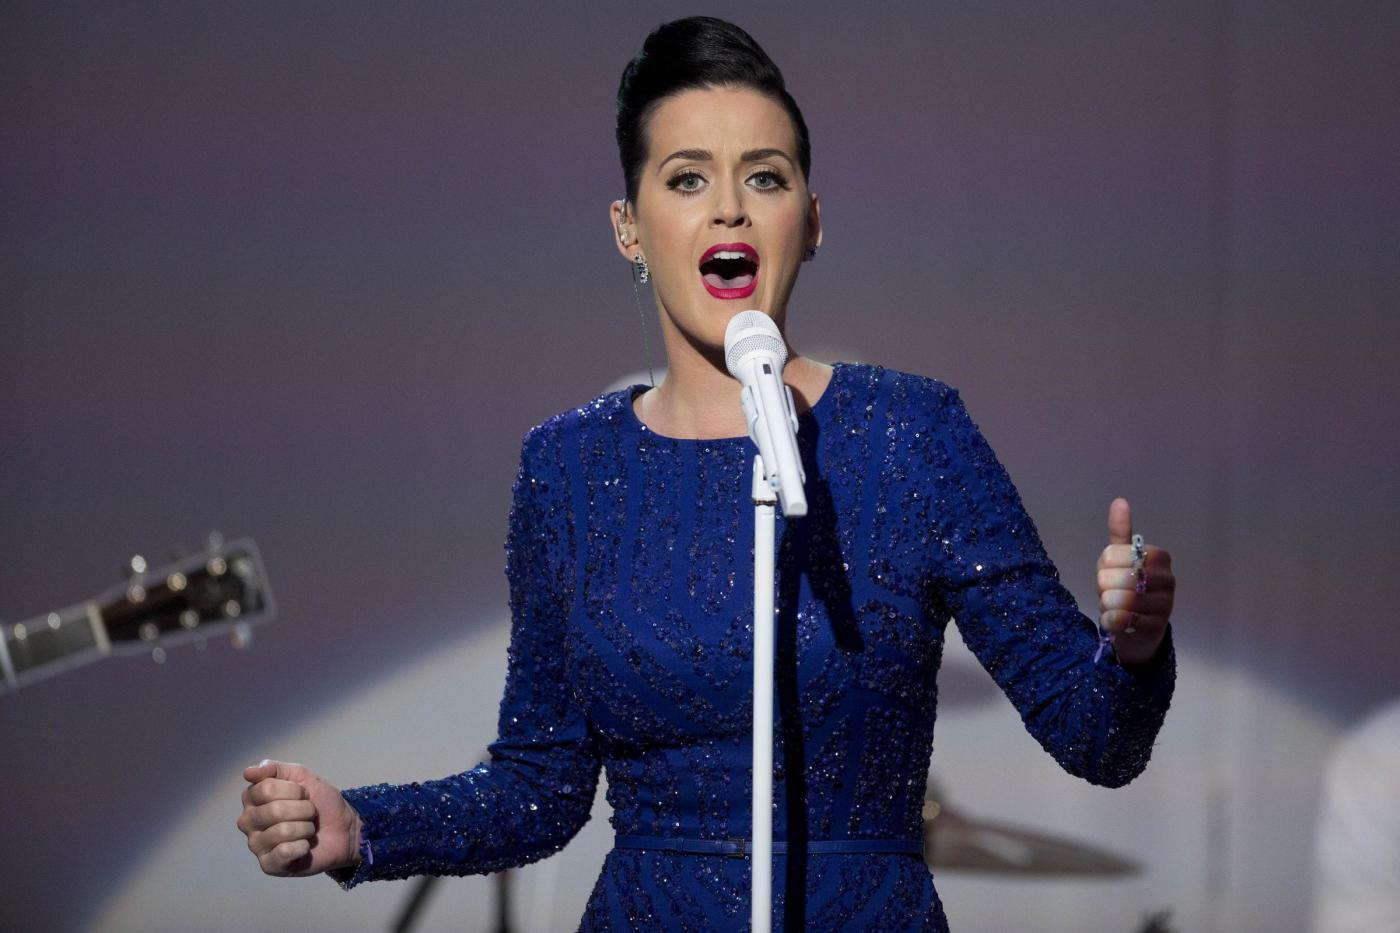 Barack Obama: "Amo Katy Perry"